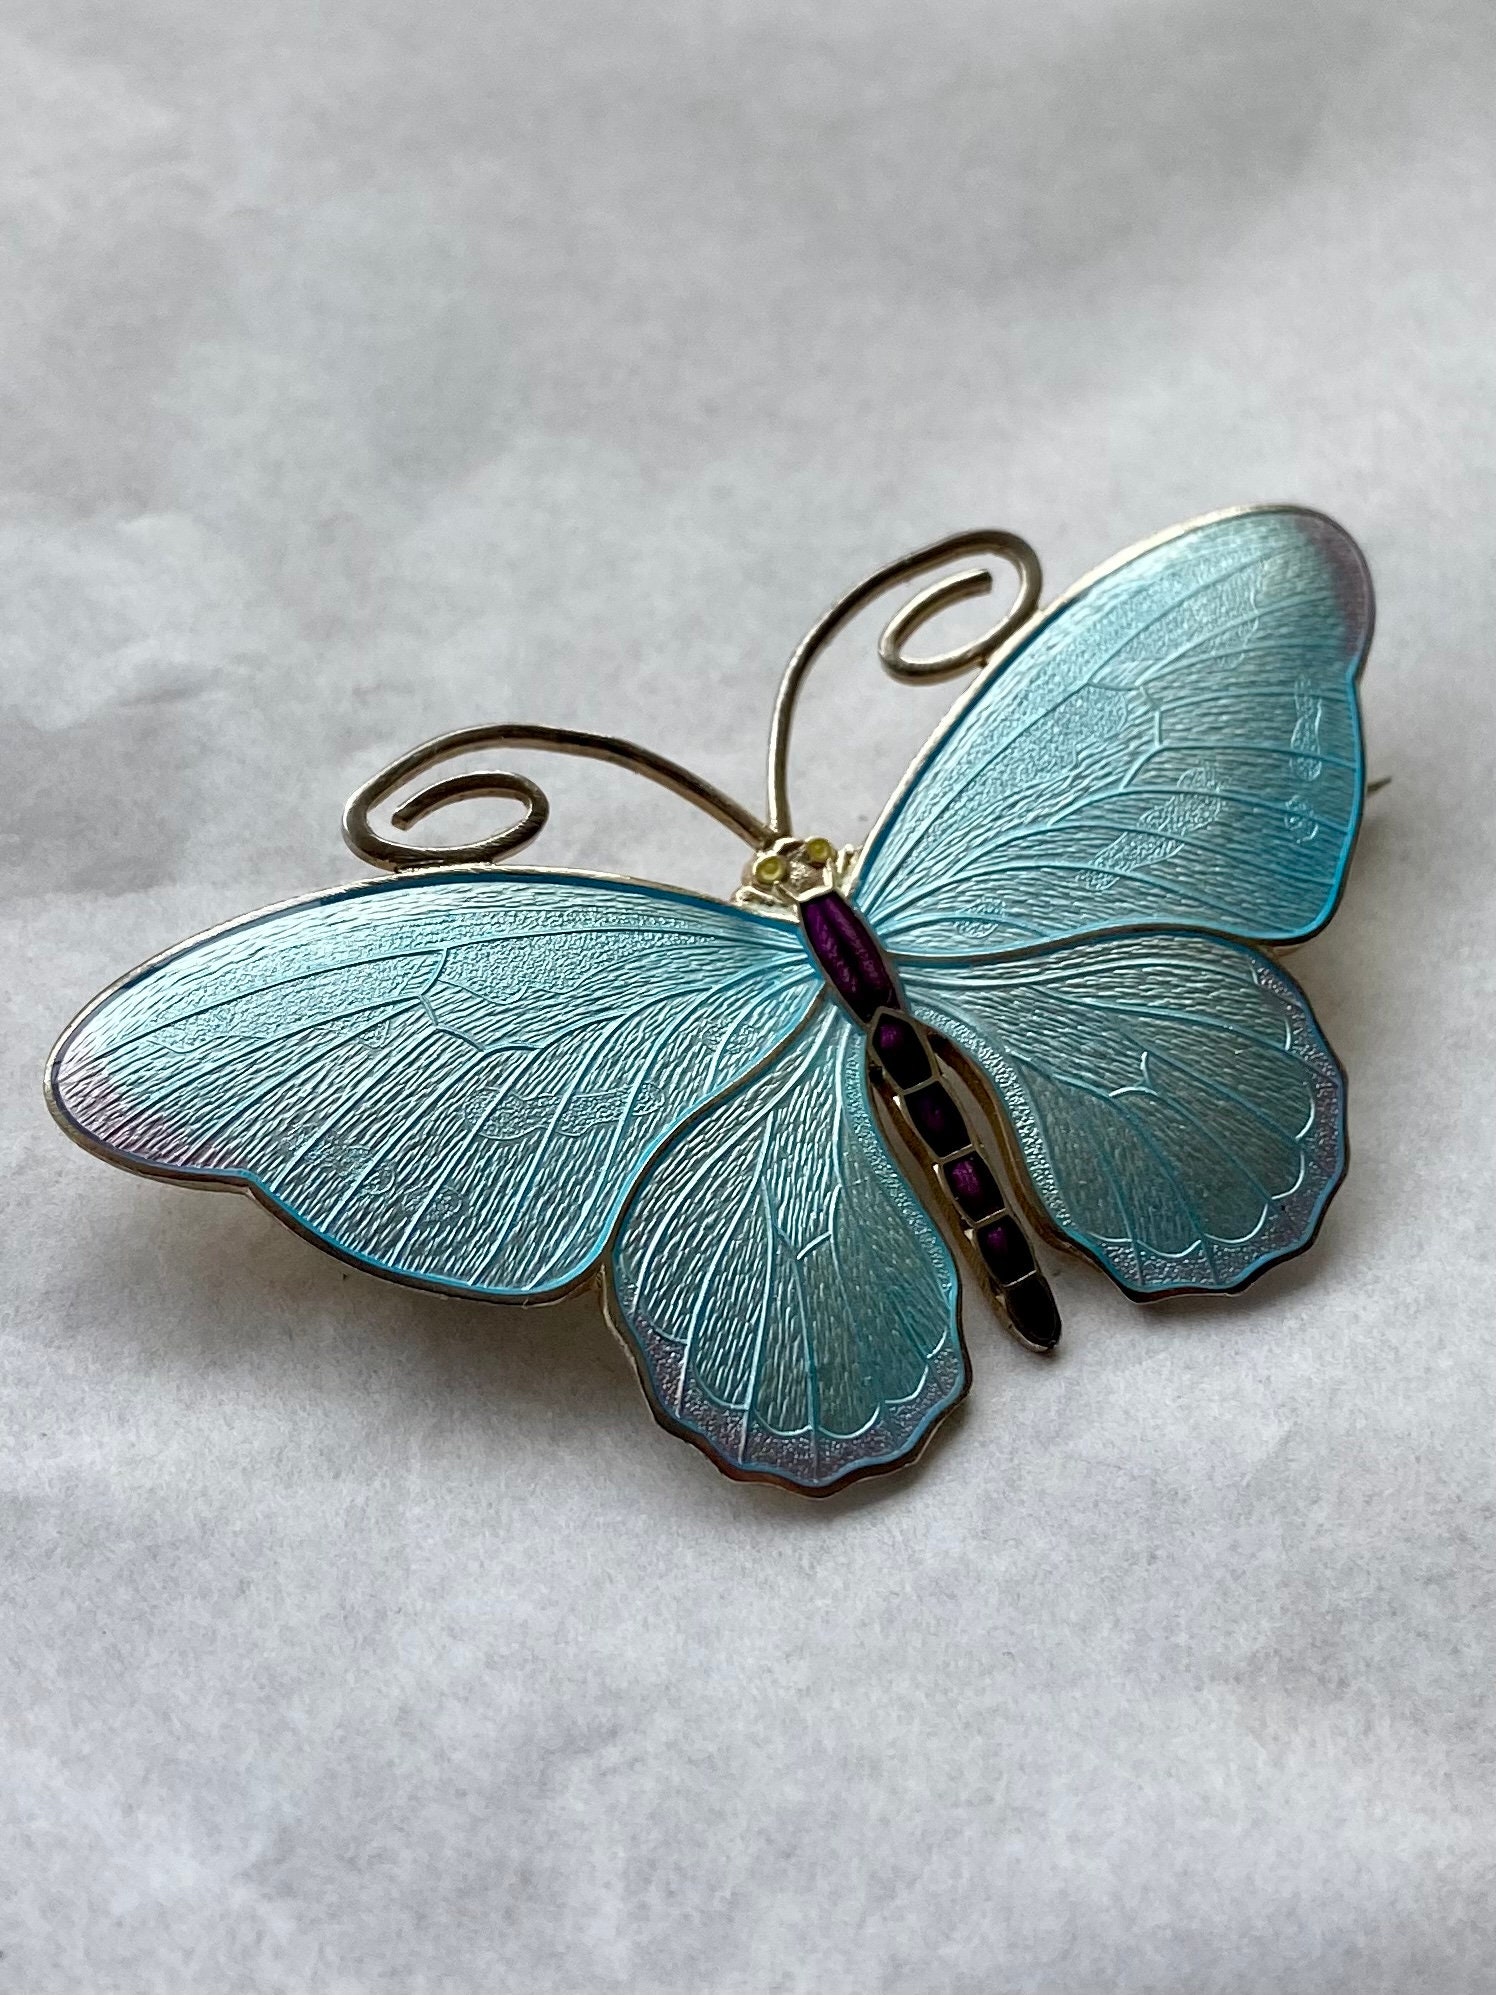 Franz Porcelain Butterfly Pin / Brooch Pendant Silver Tone Estate #3030